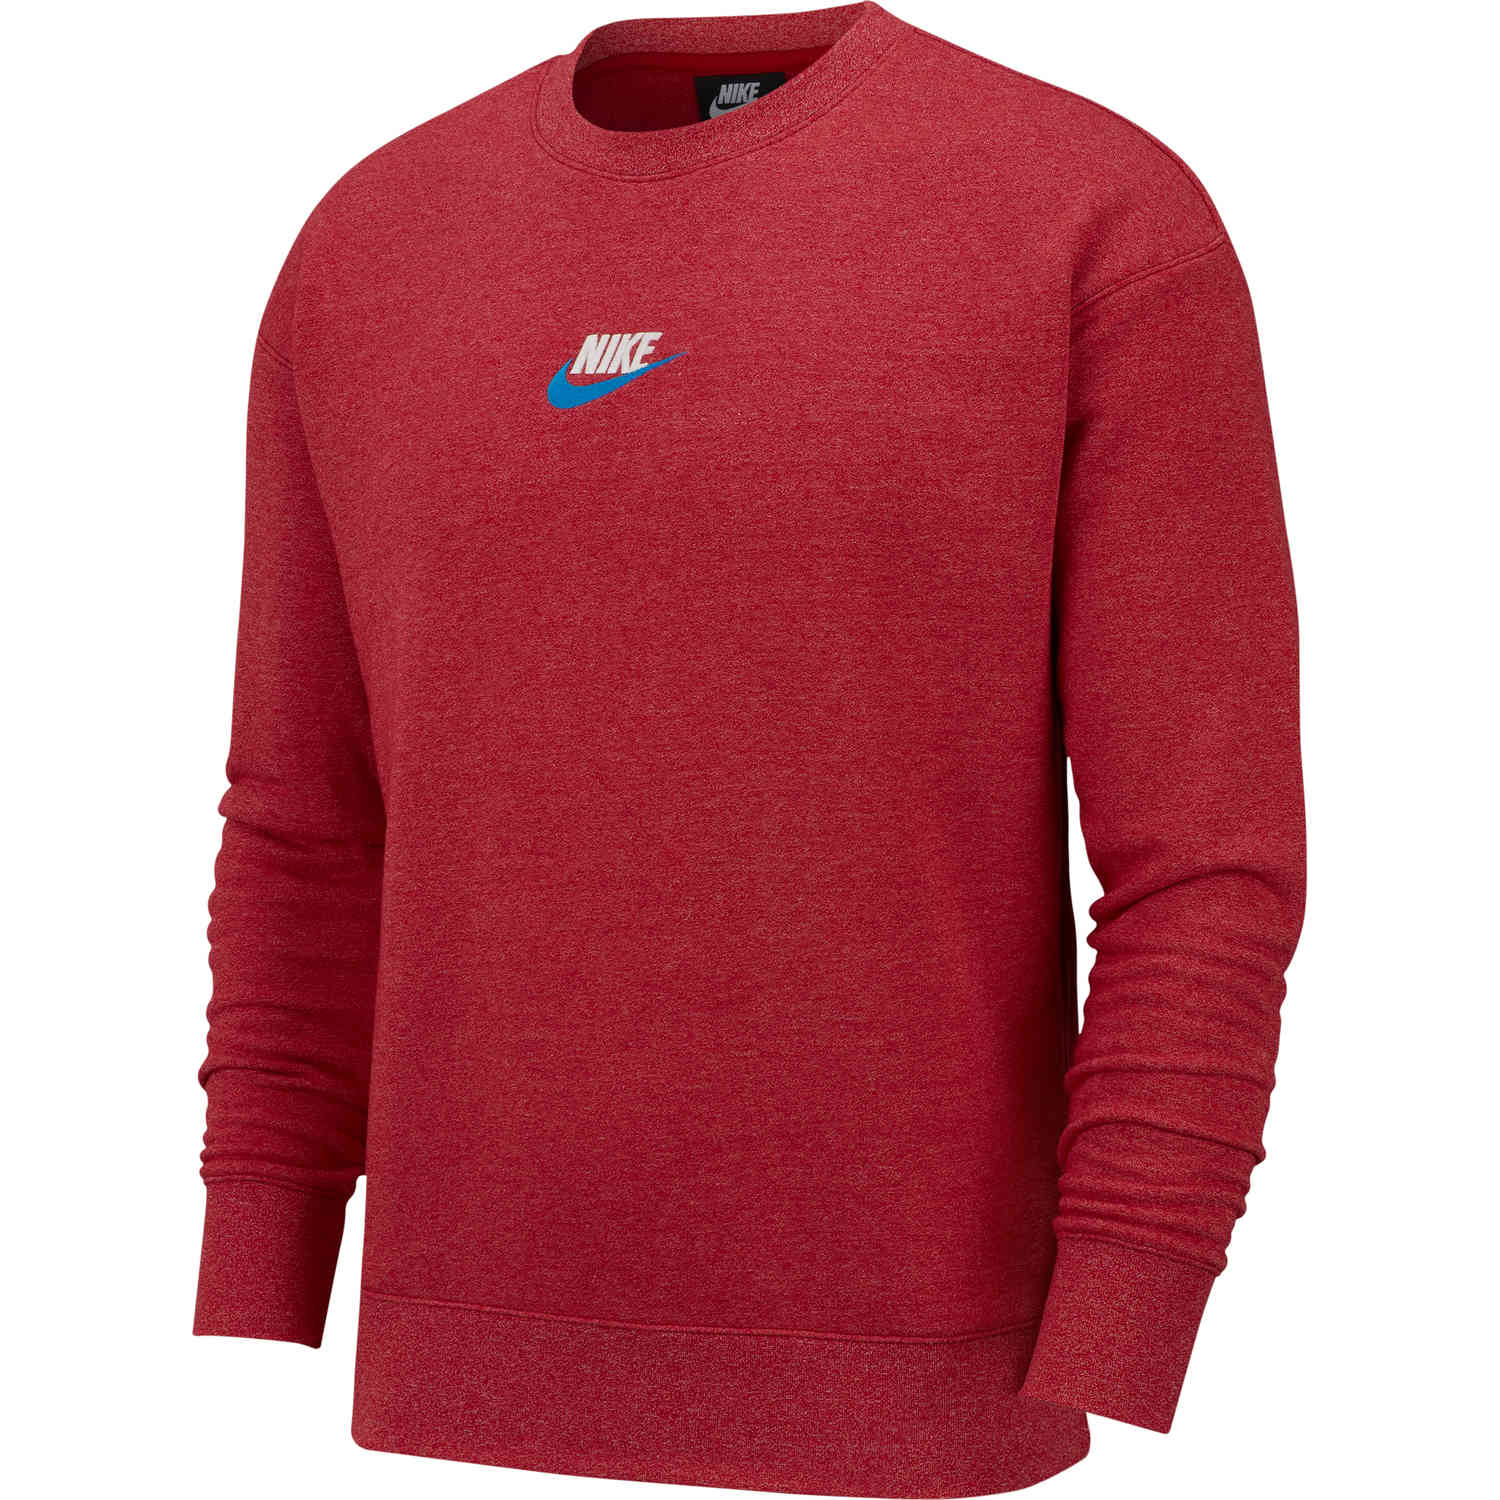 Heritage Sweatshirt by Nike